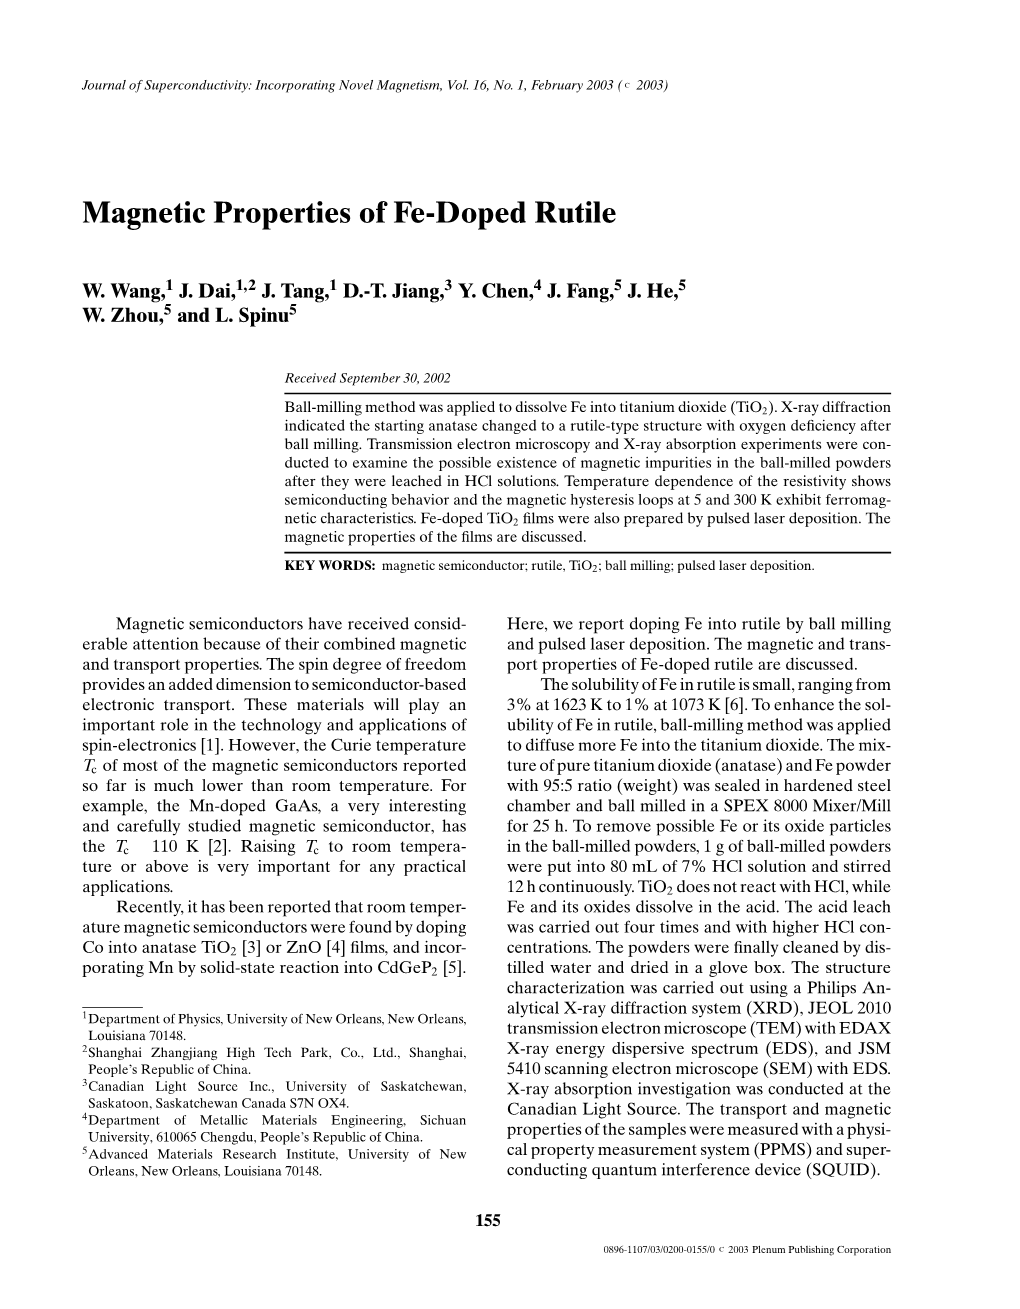 Magnetic Properties of Fe-Doped Rutile